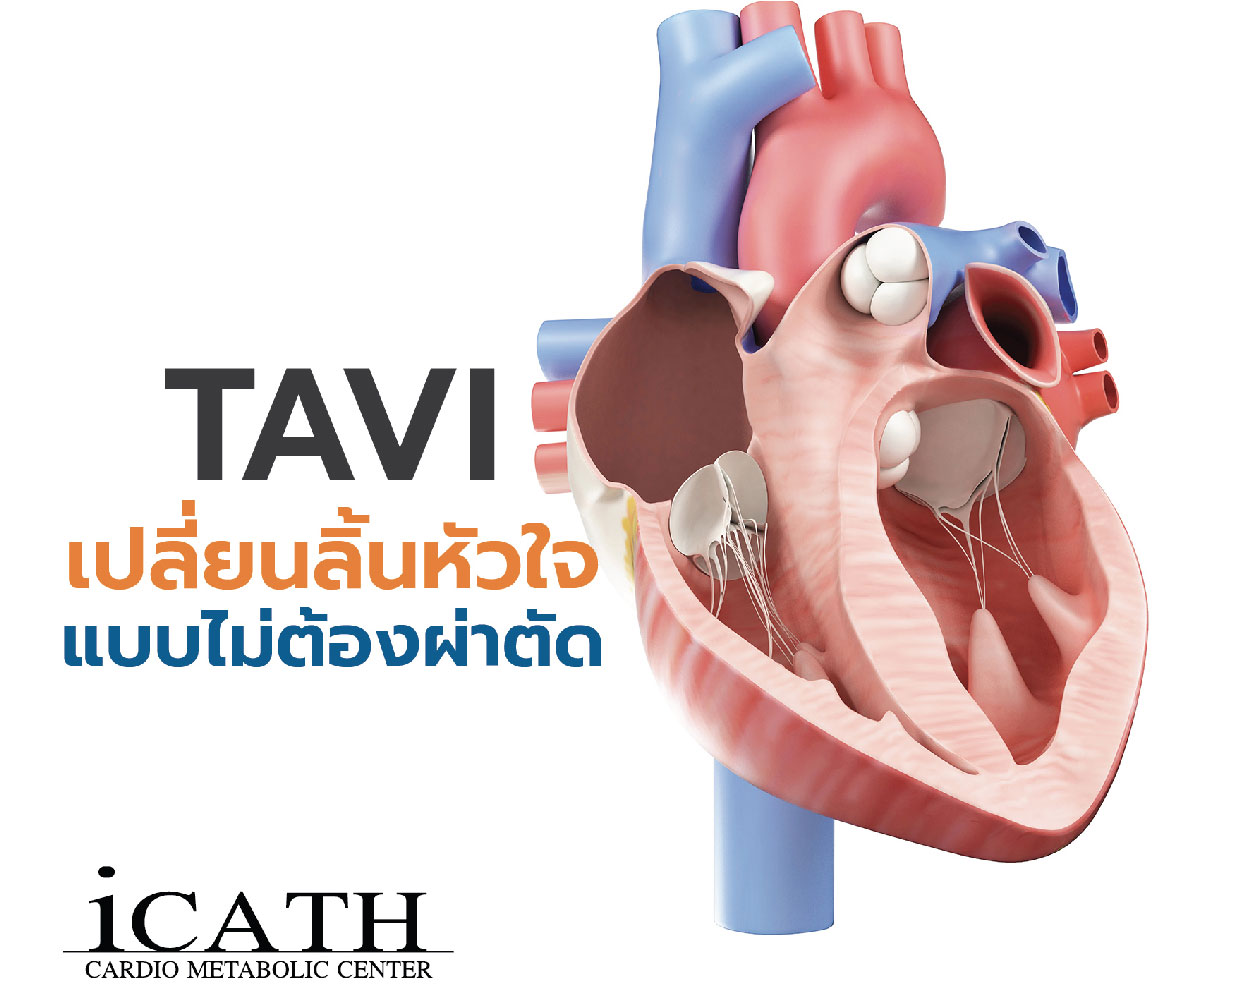 TAVI / TAVR การเปลี่ยนลิ้นหัวใจแบบไม่ต้องผ่าตัดเปิดหน้าอก